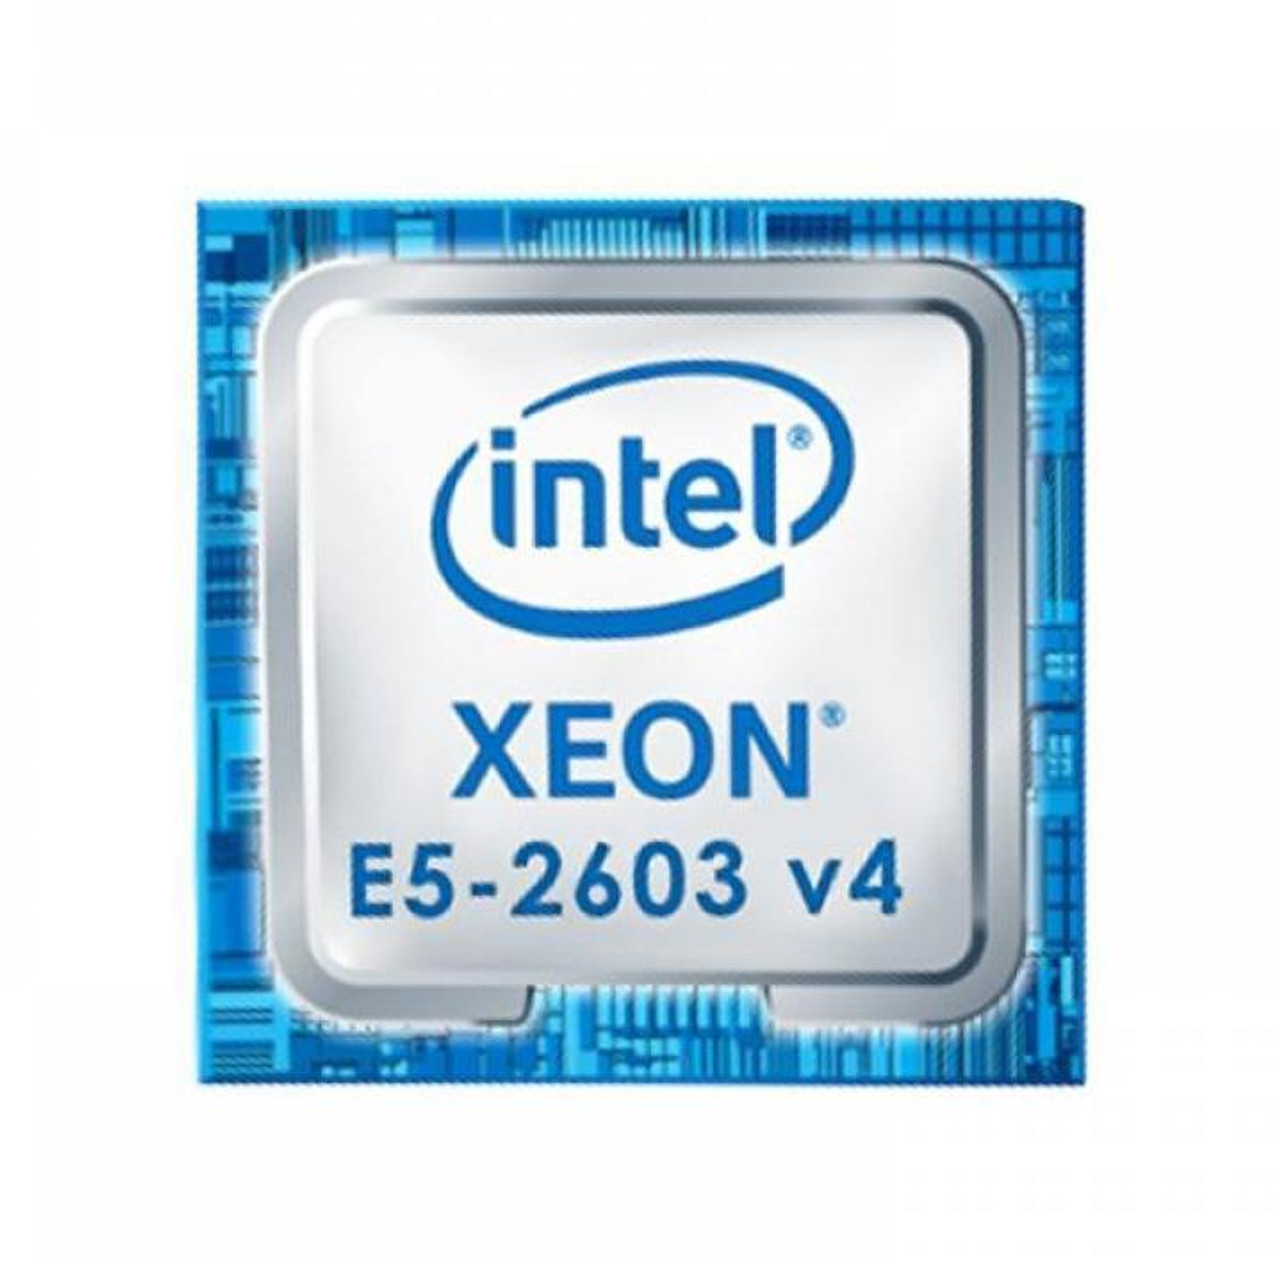 HPE 1.70GHz 6.40GT/s QPI 15MB L3 Cache Socket FCLGA2011-3 Intel Xeon E5-2603 v4 6-Core Processor